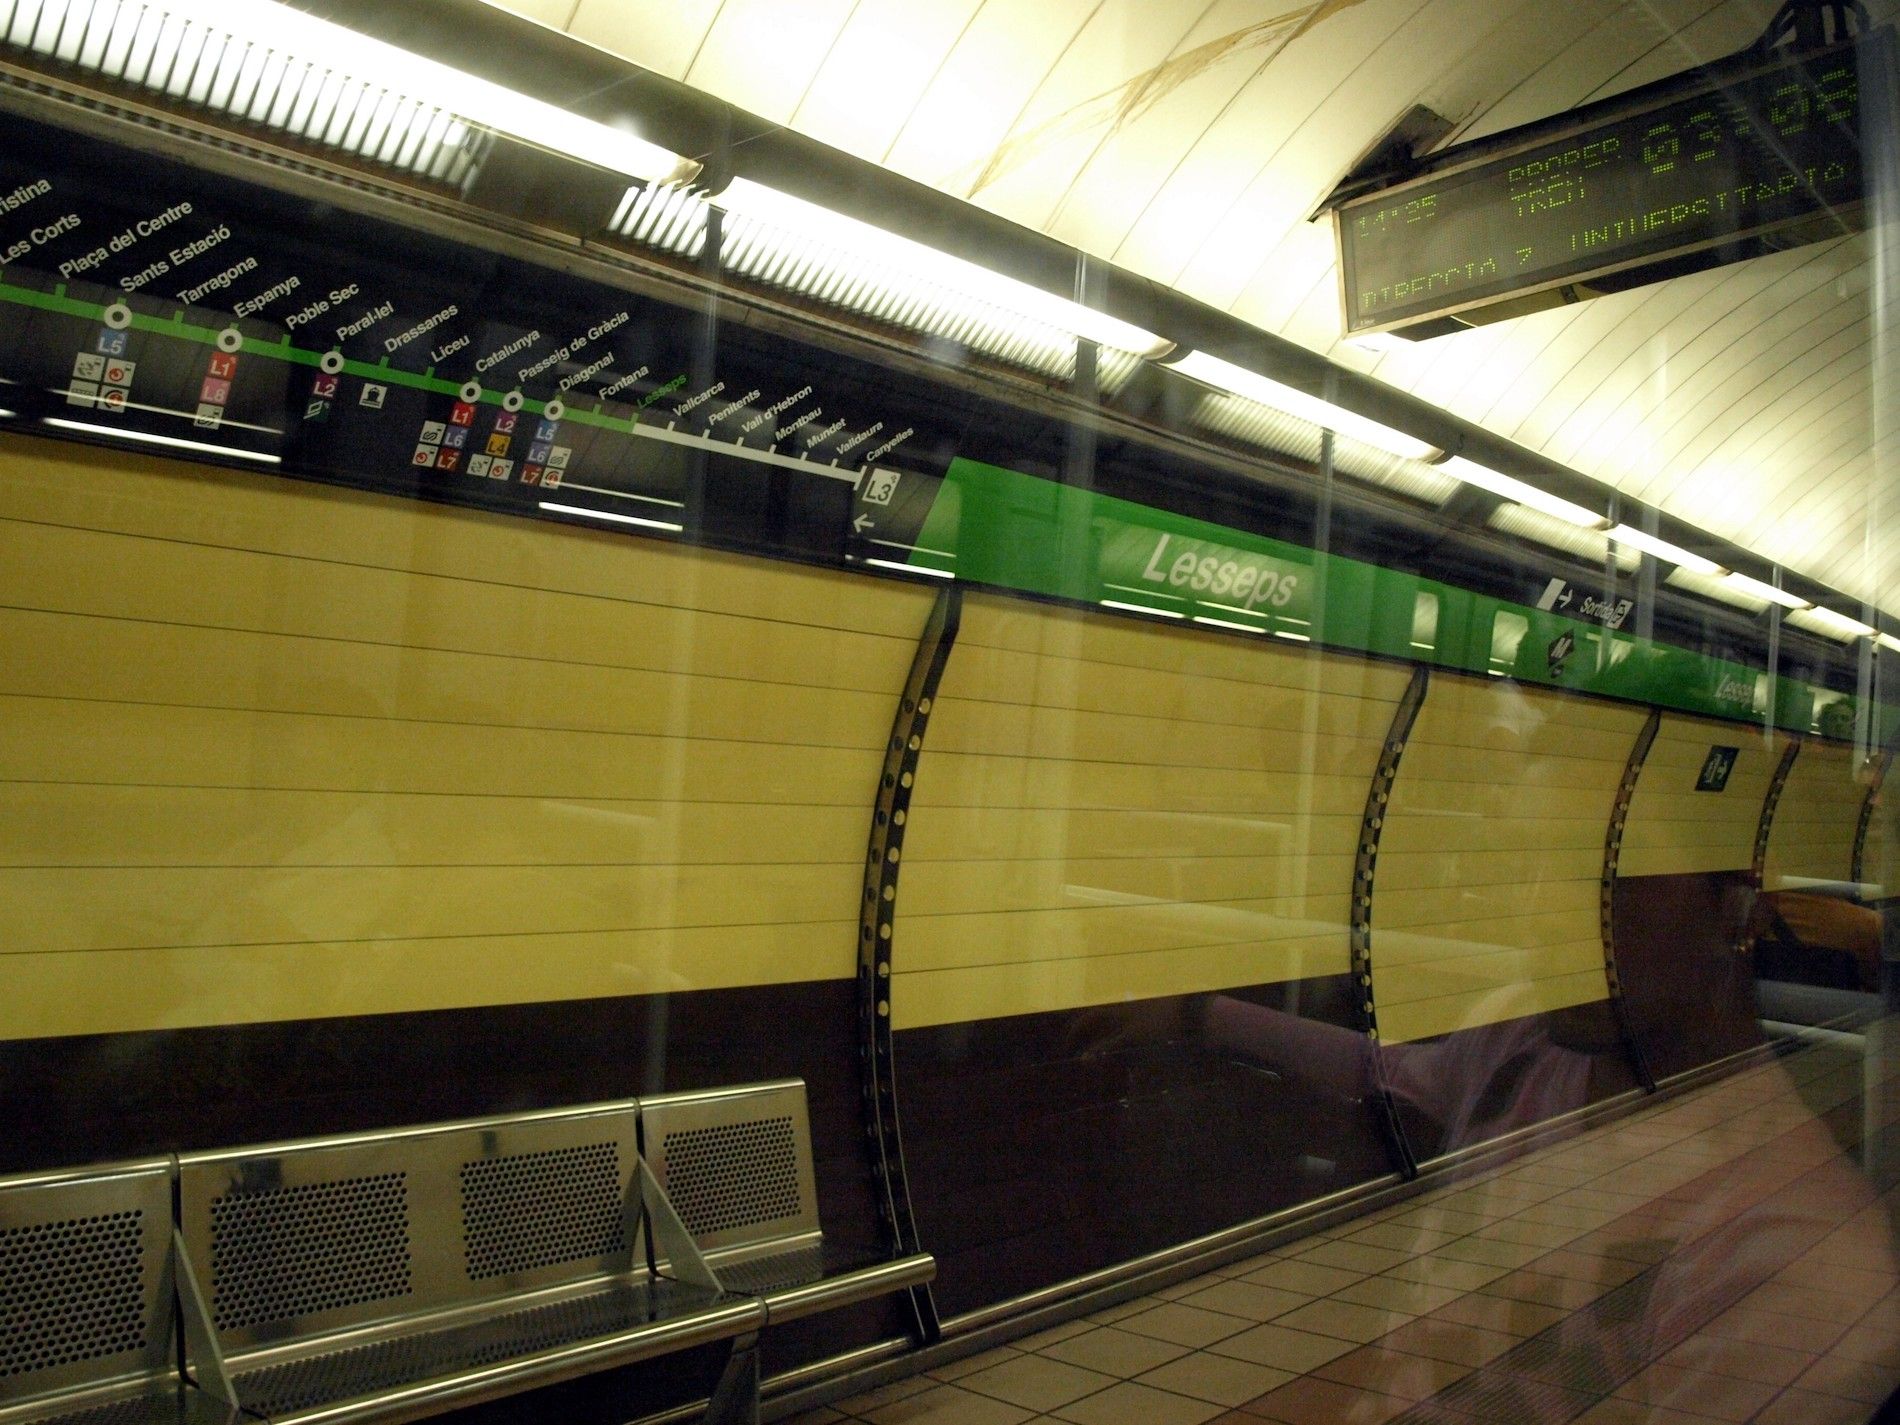 Metro Lesseps Barcelona / Wikimedia Commons